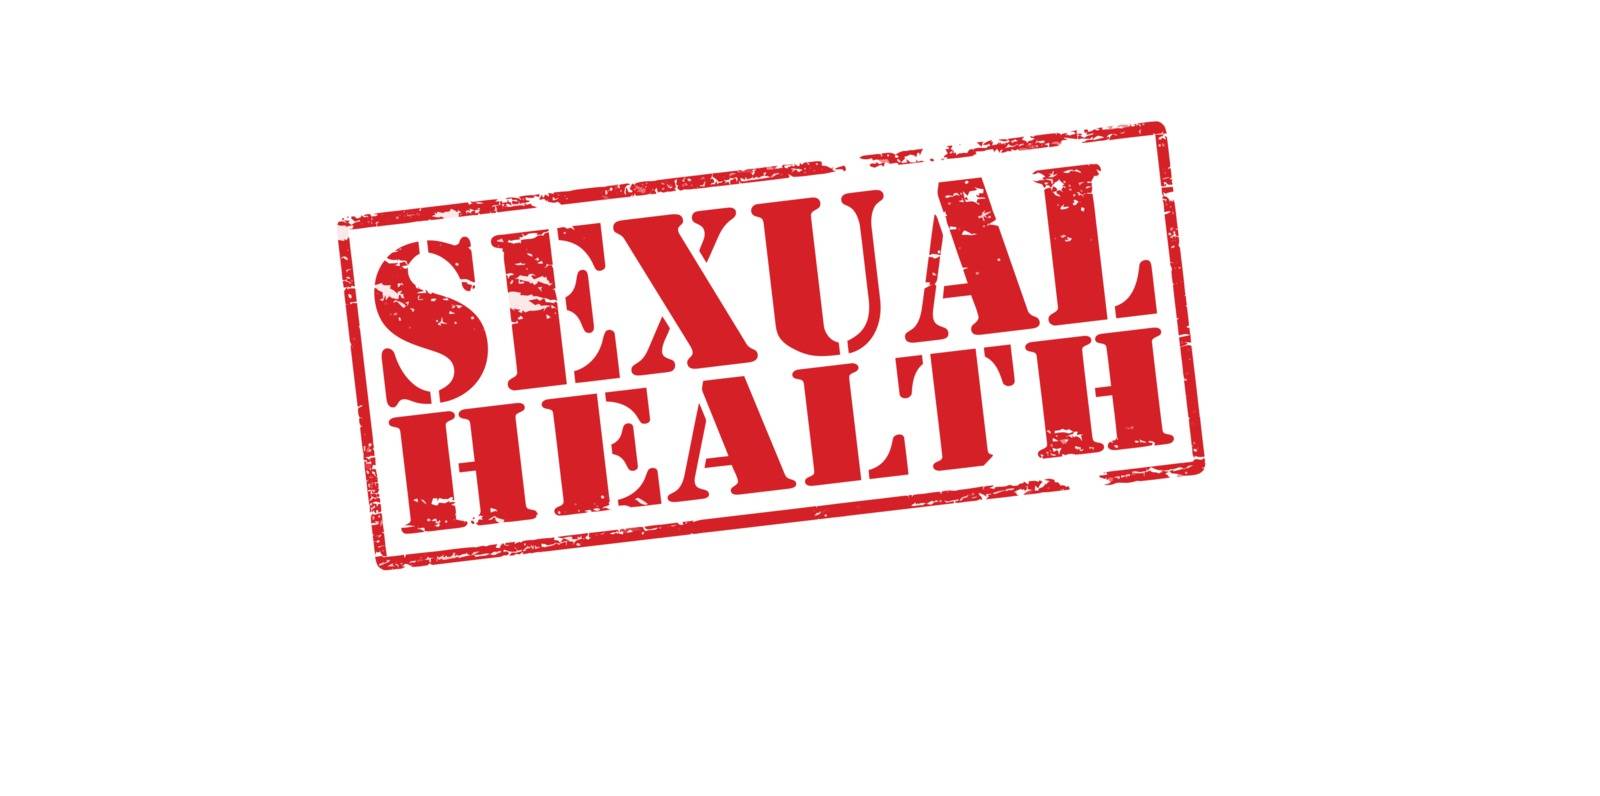 Sexual health by carmenbobo